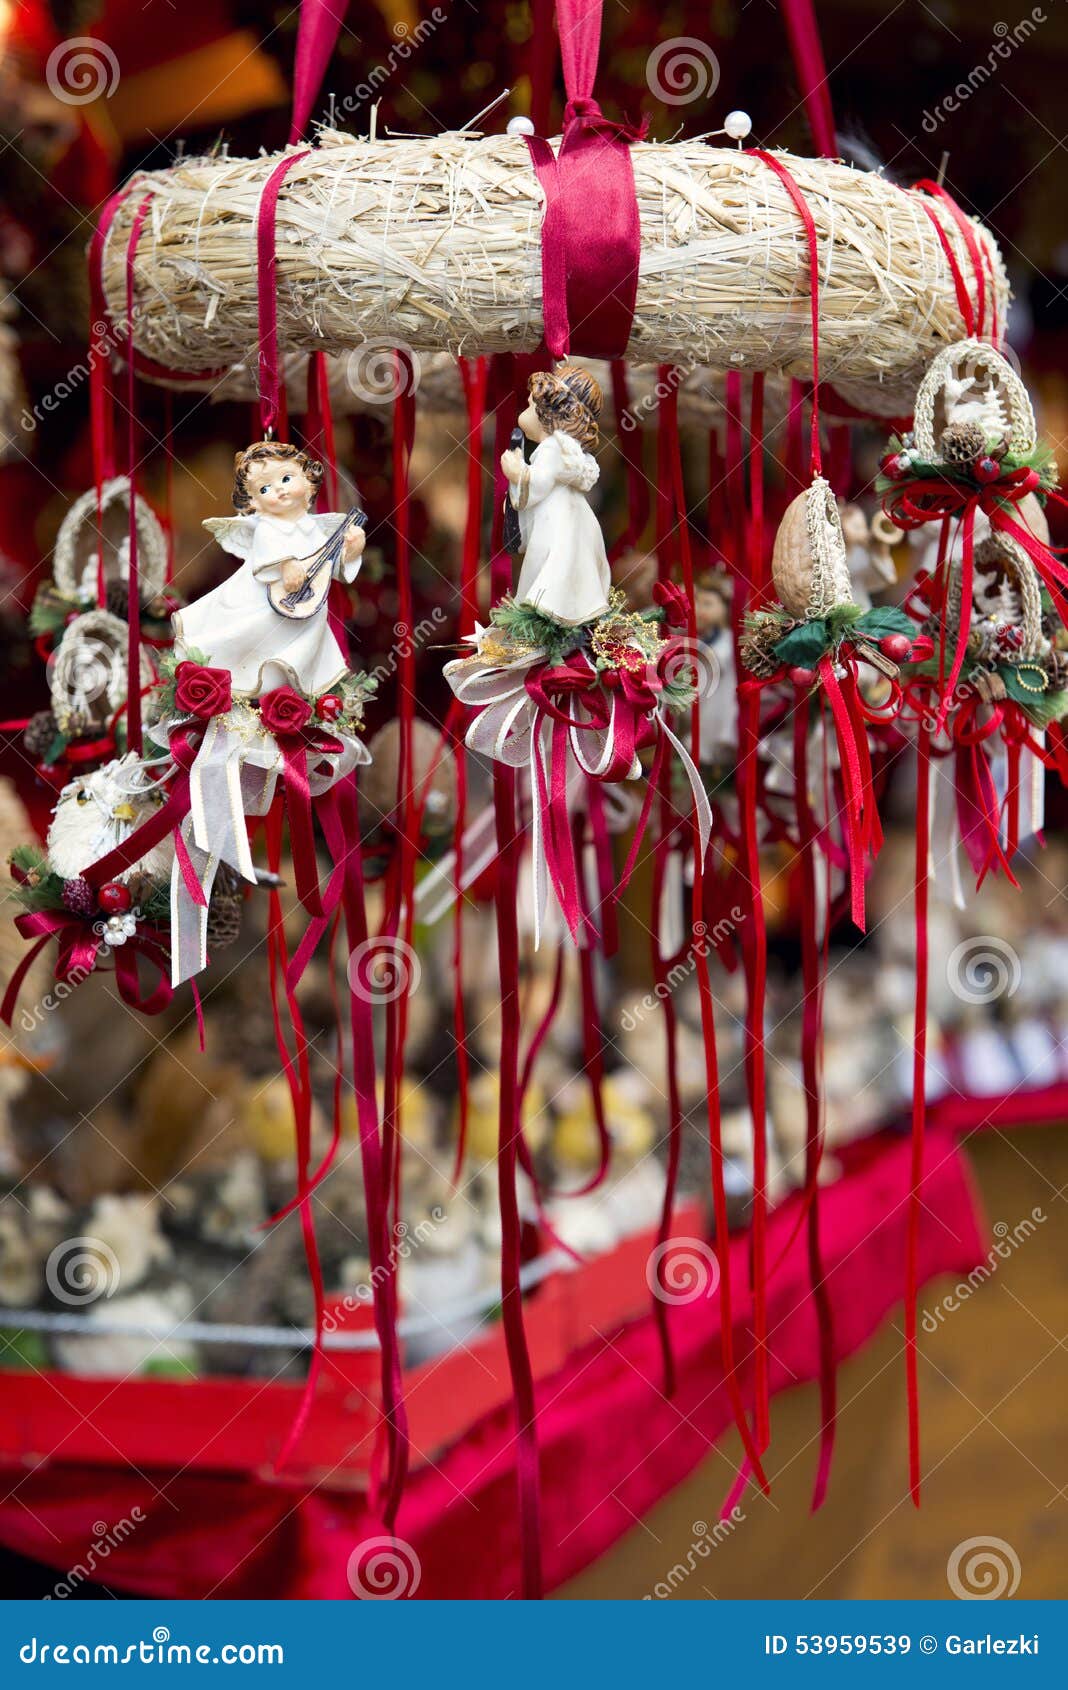 Traditional German Christmas Decorations Stock Image - Image of ...